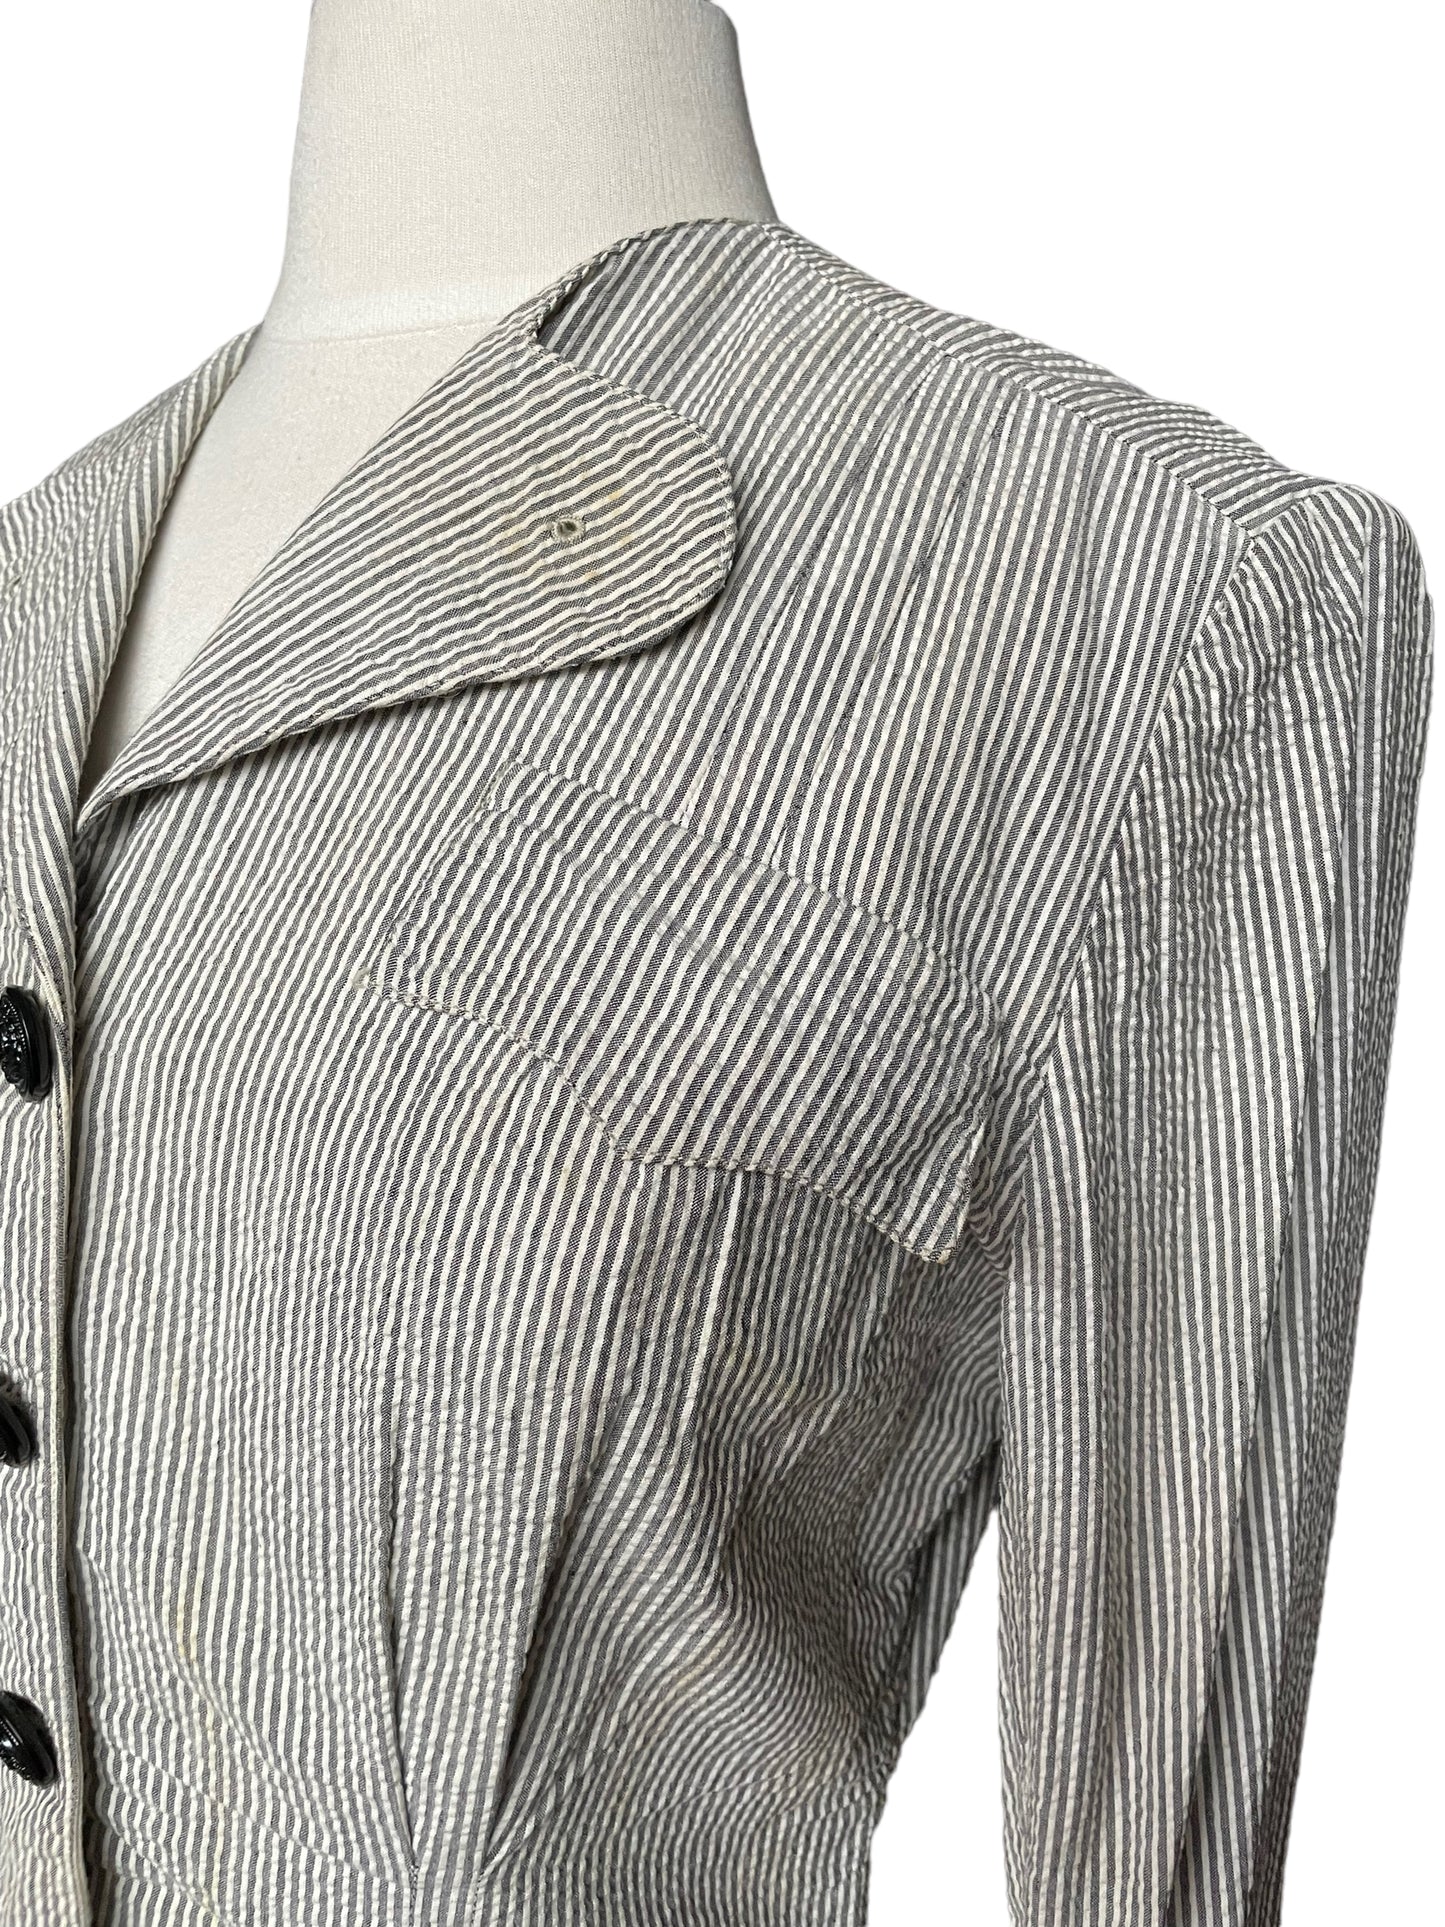 Vintage 1940s U.S. Coast Guard Seersucker Ladies Jacket | Seattle True Vintage | Barn Owl Ladies Clothing